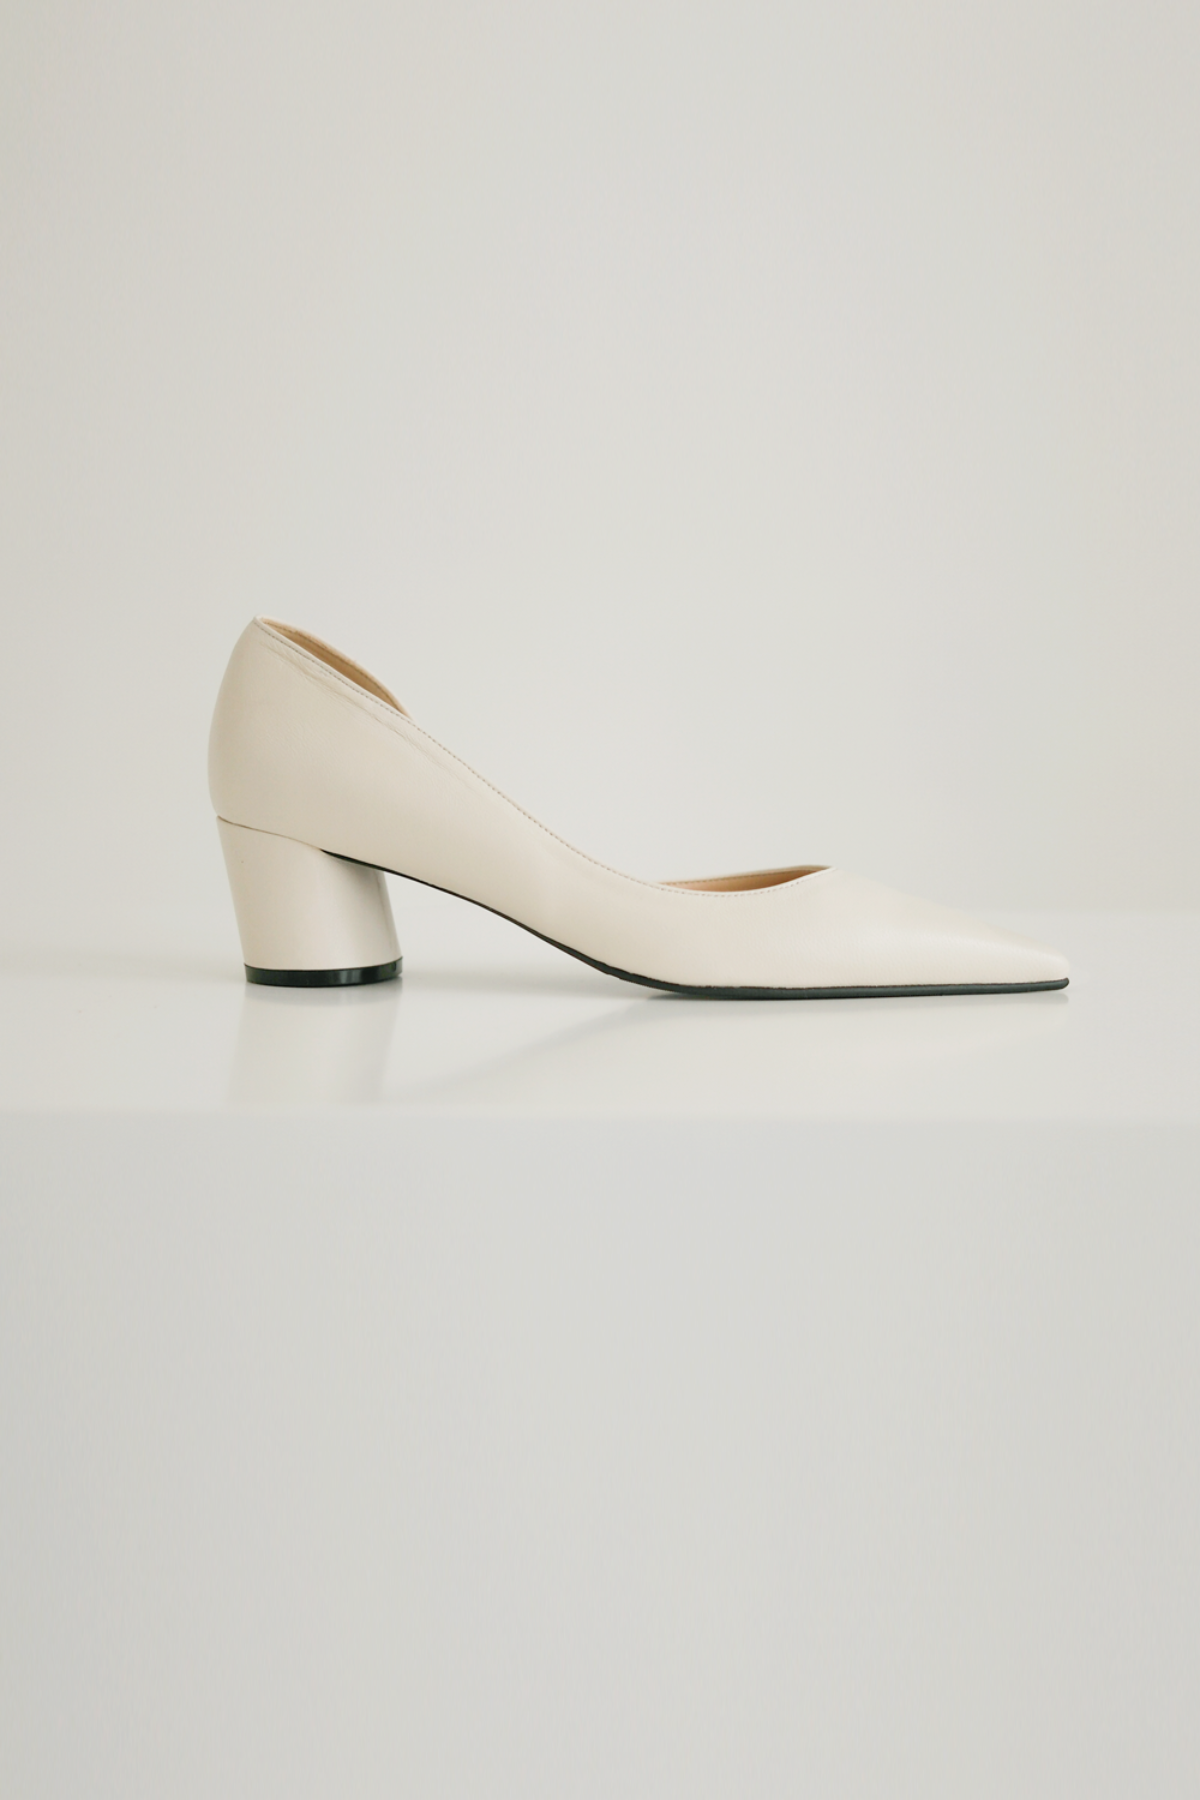 ANTHÈSE pin stiletto heel, ivory